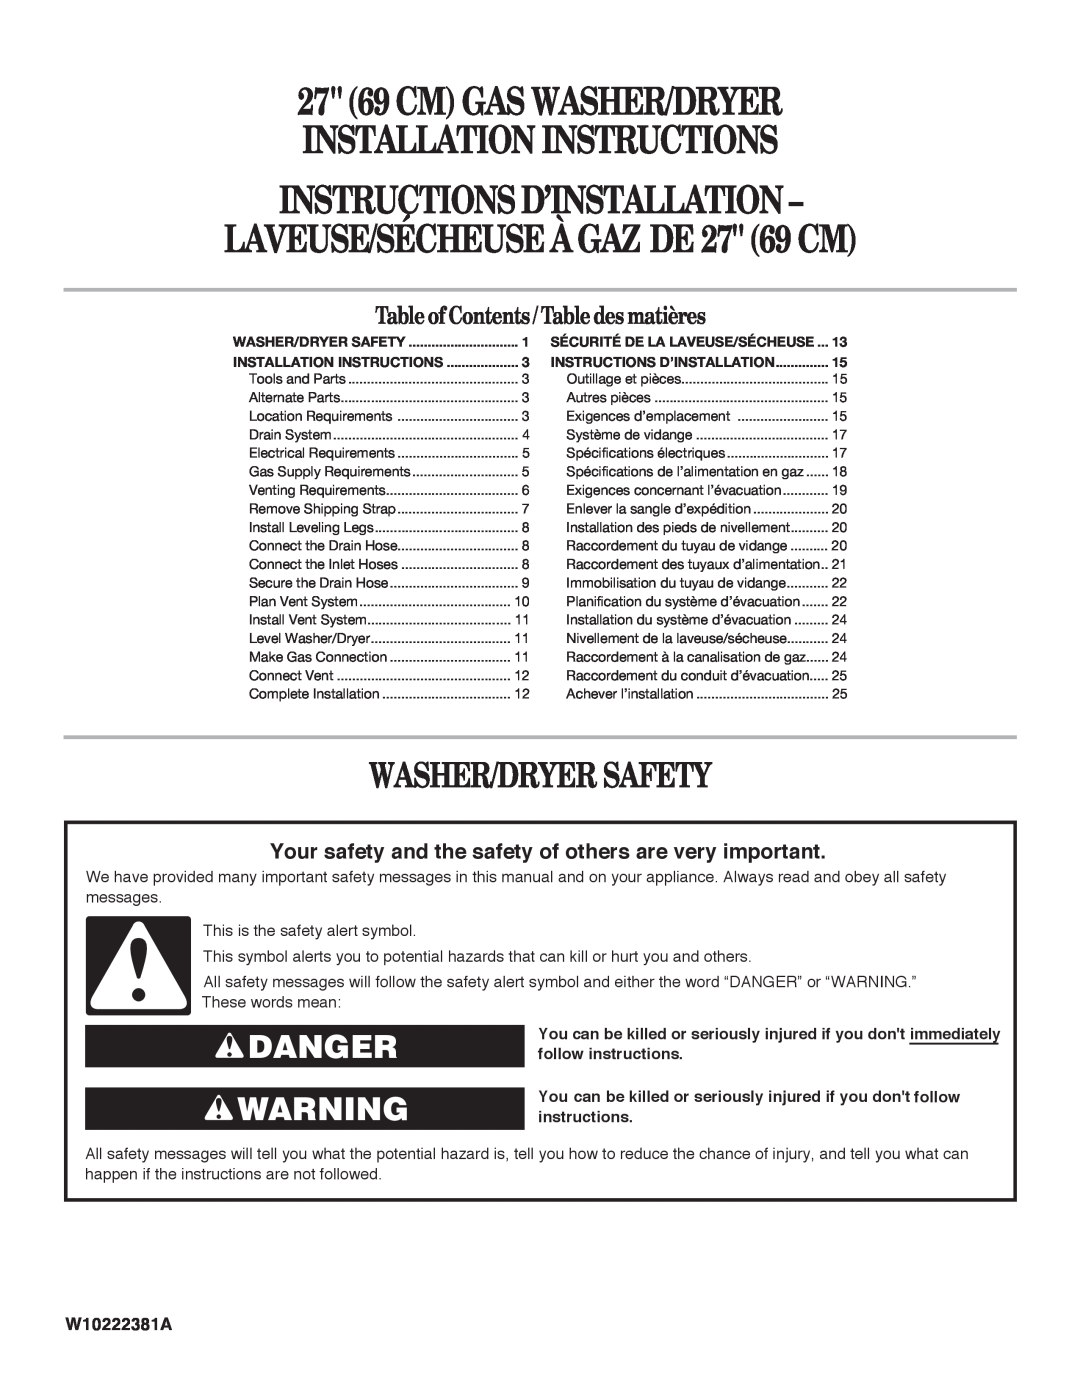 Whirlpool Gas Washer/Dryer installation instructions Washer/Dryer Safety, Danger Warning, TableofContents/Tabledesmatières 